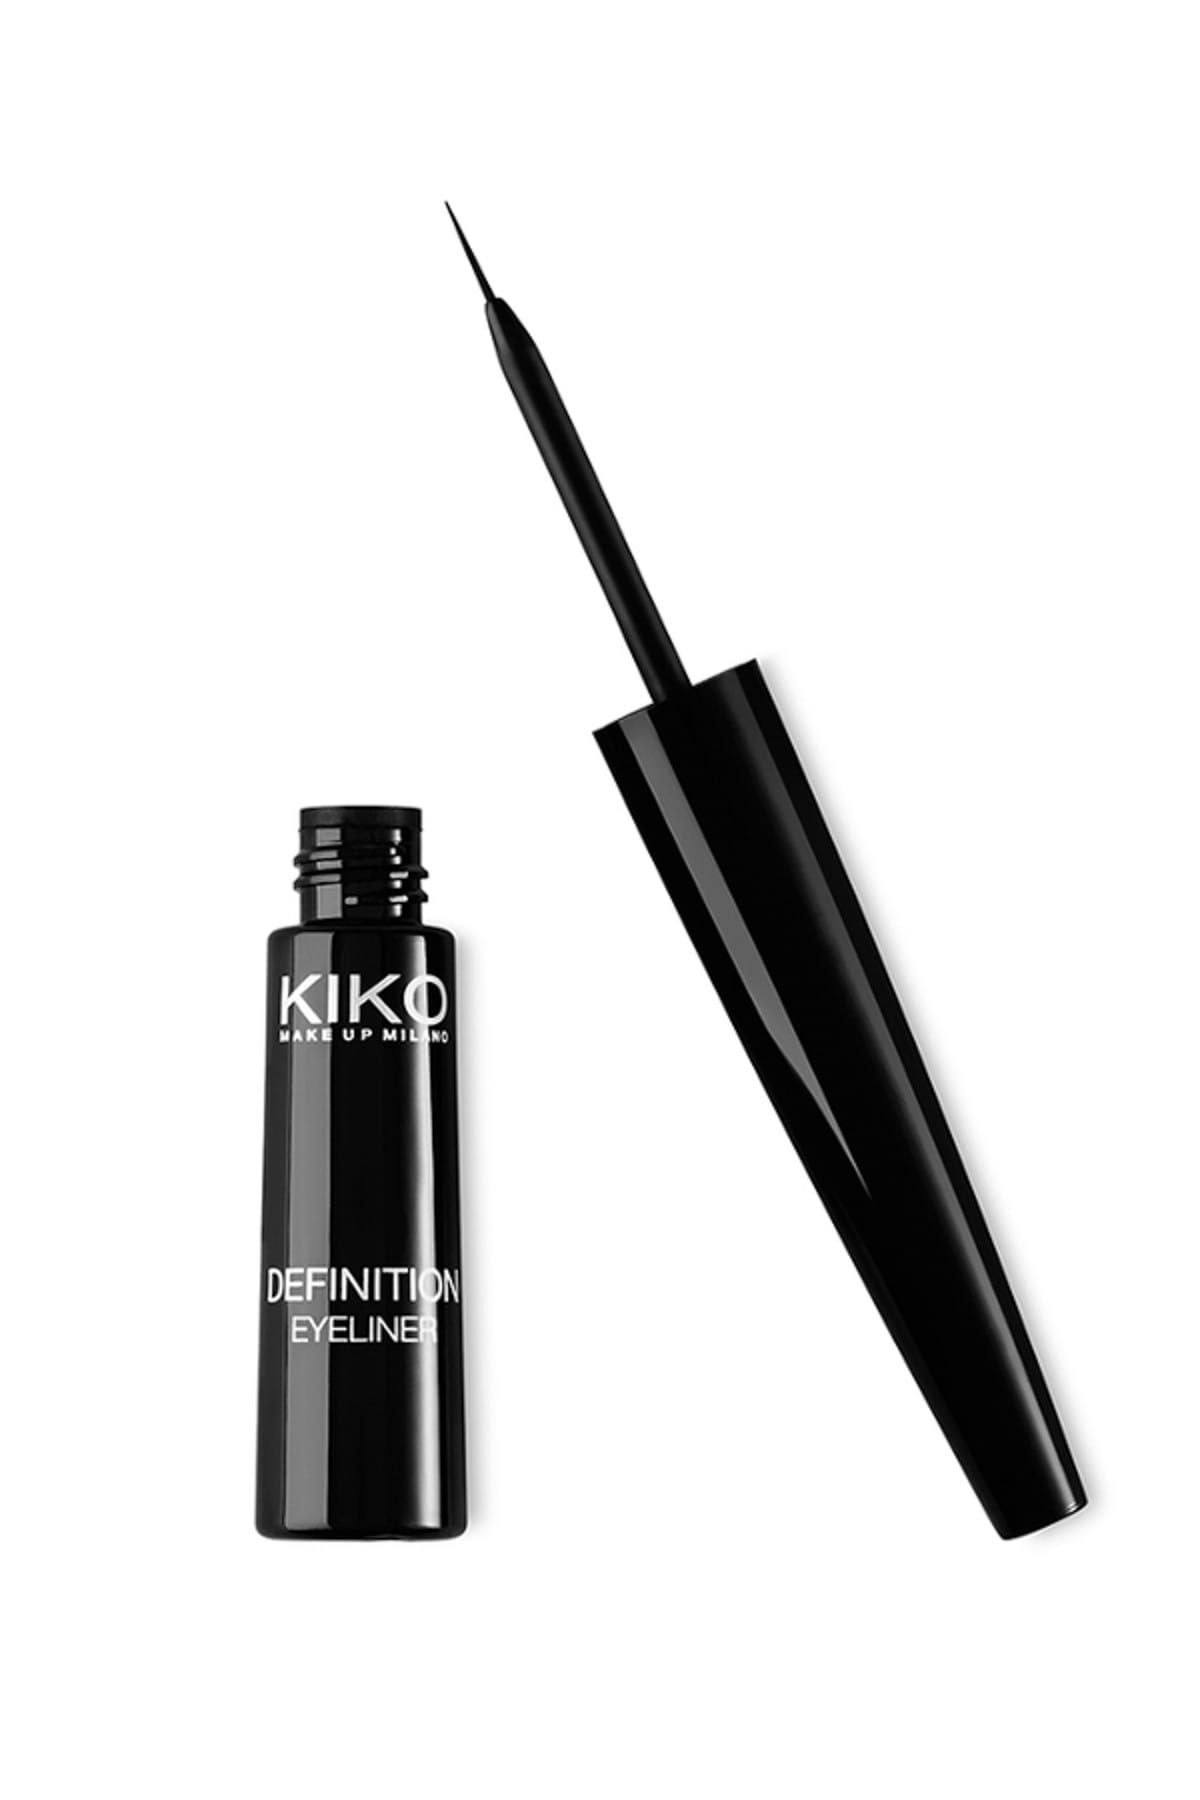 KIKO Siyah Eyeliner - Definition Eyeliner 5 ml 8025272611022